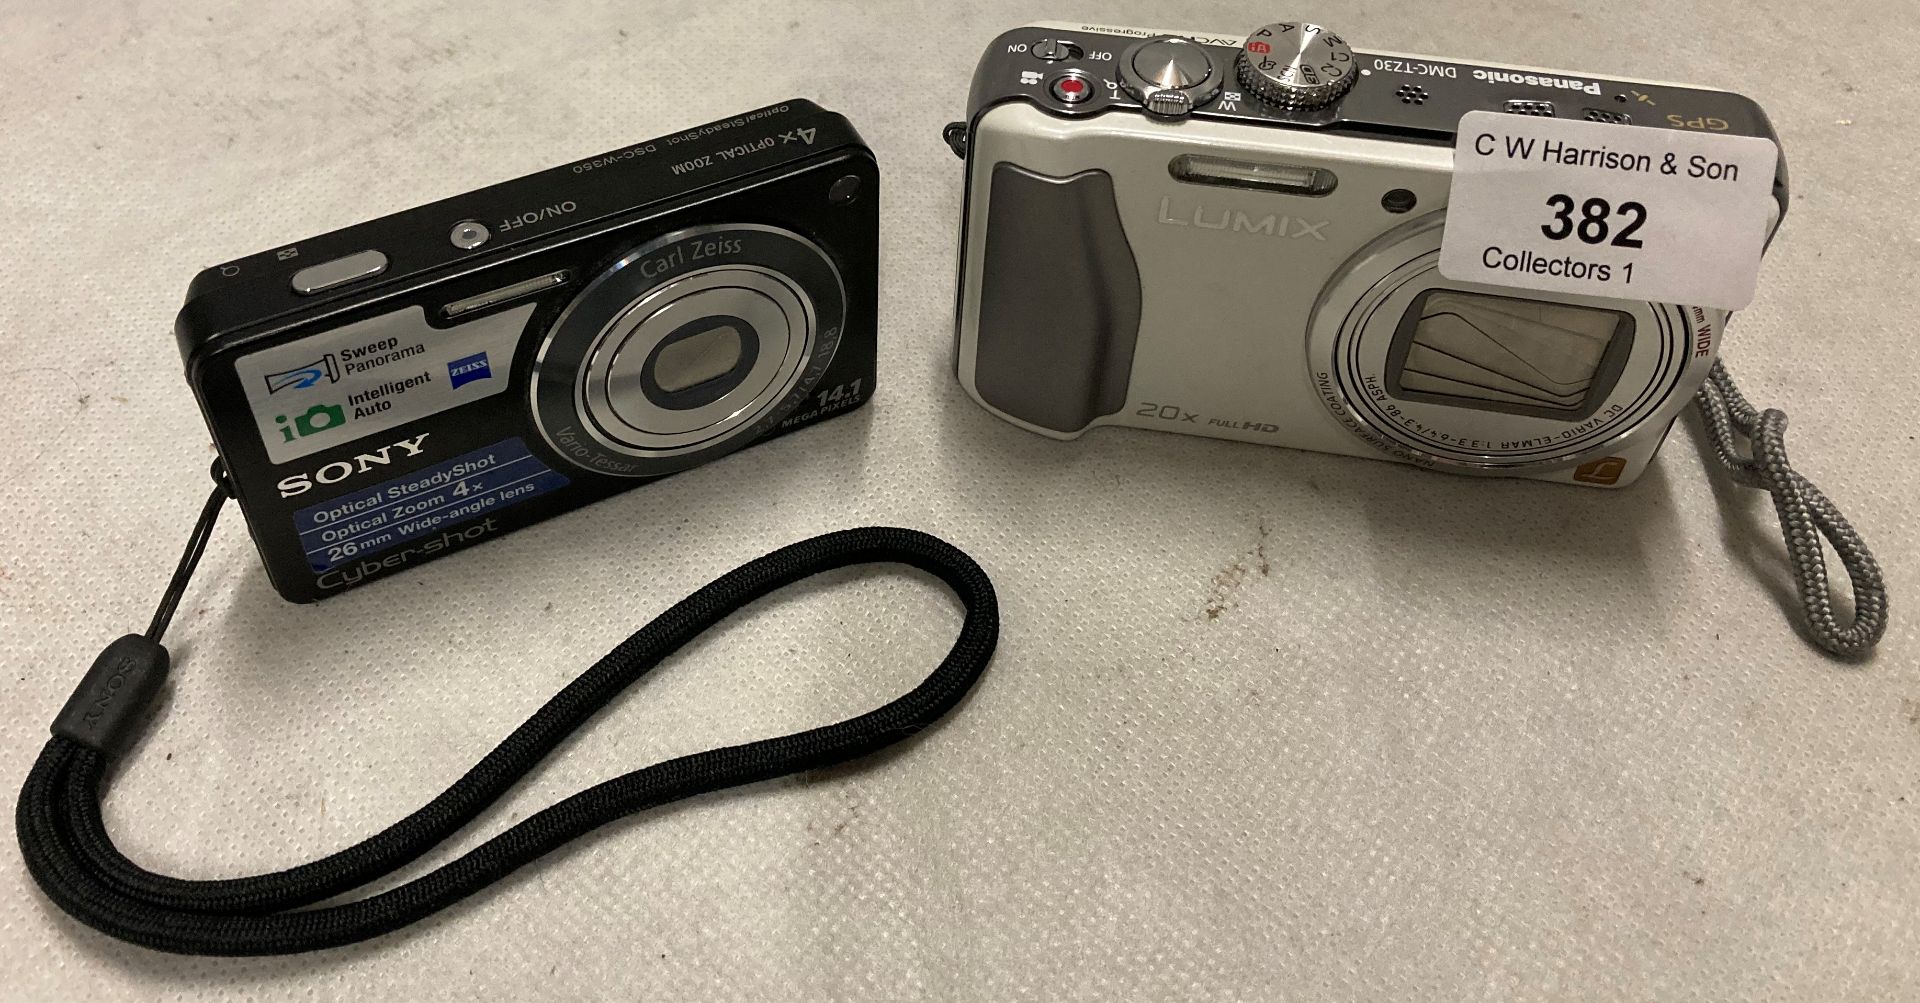 Lumix Panasonic 20X DMC-T230 full HD digital camera and a Sony DSCW350 digital camera (no charger)